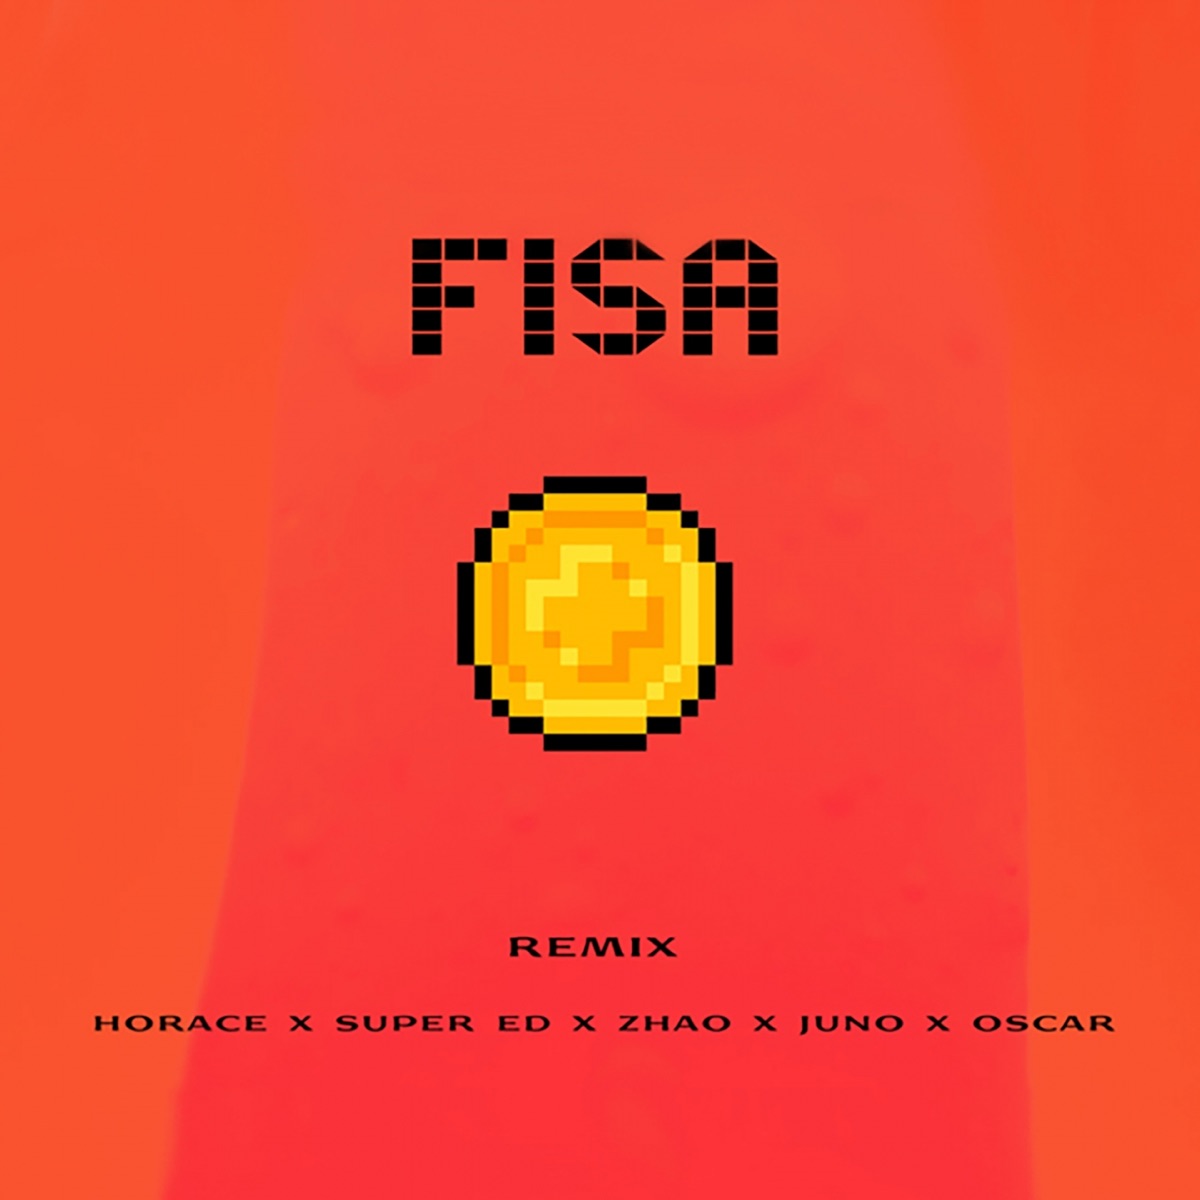 Masca Pe Fata (feat. Amuly) - Single by Oscar on Apple Music